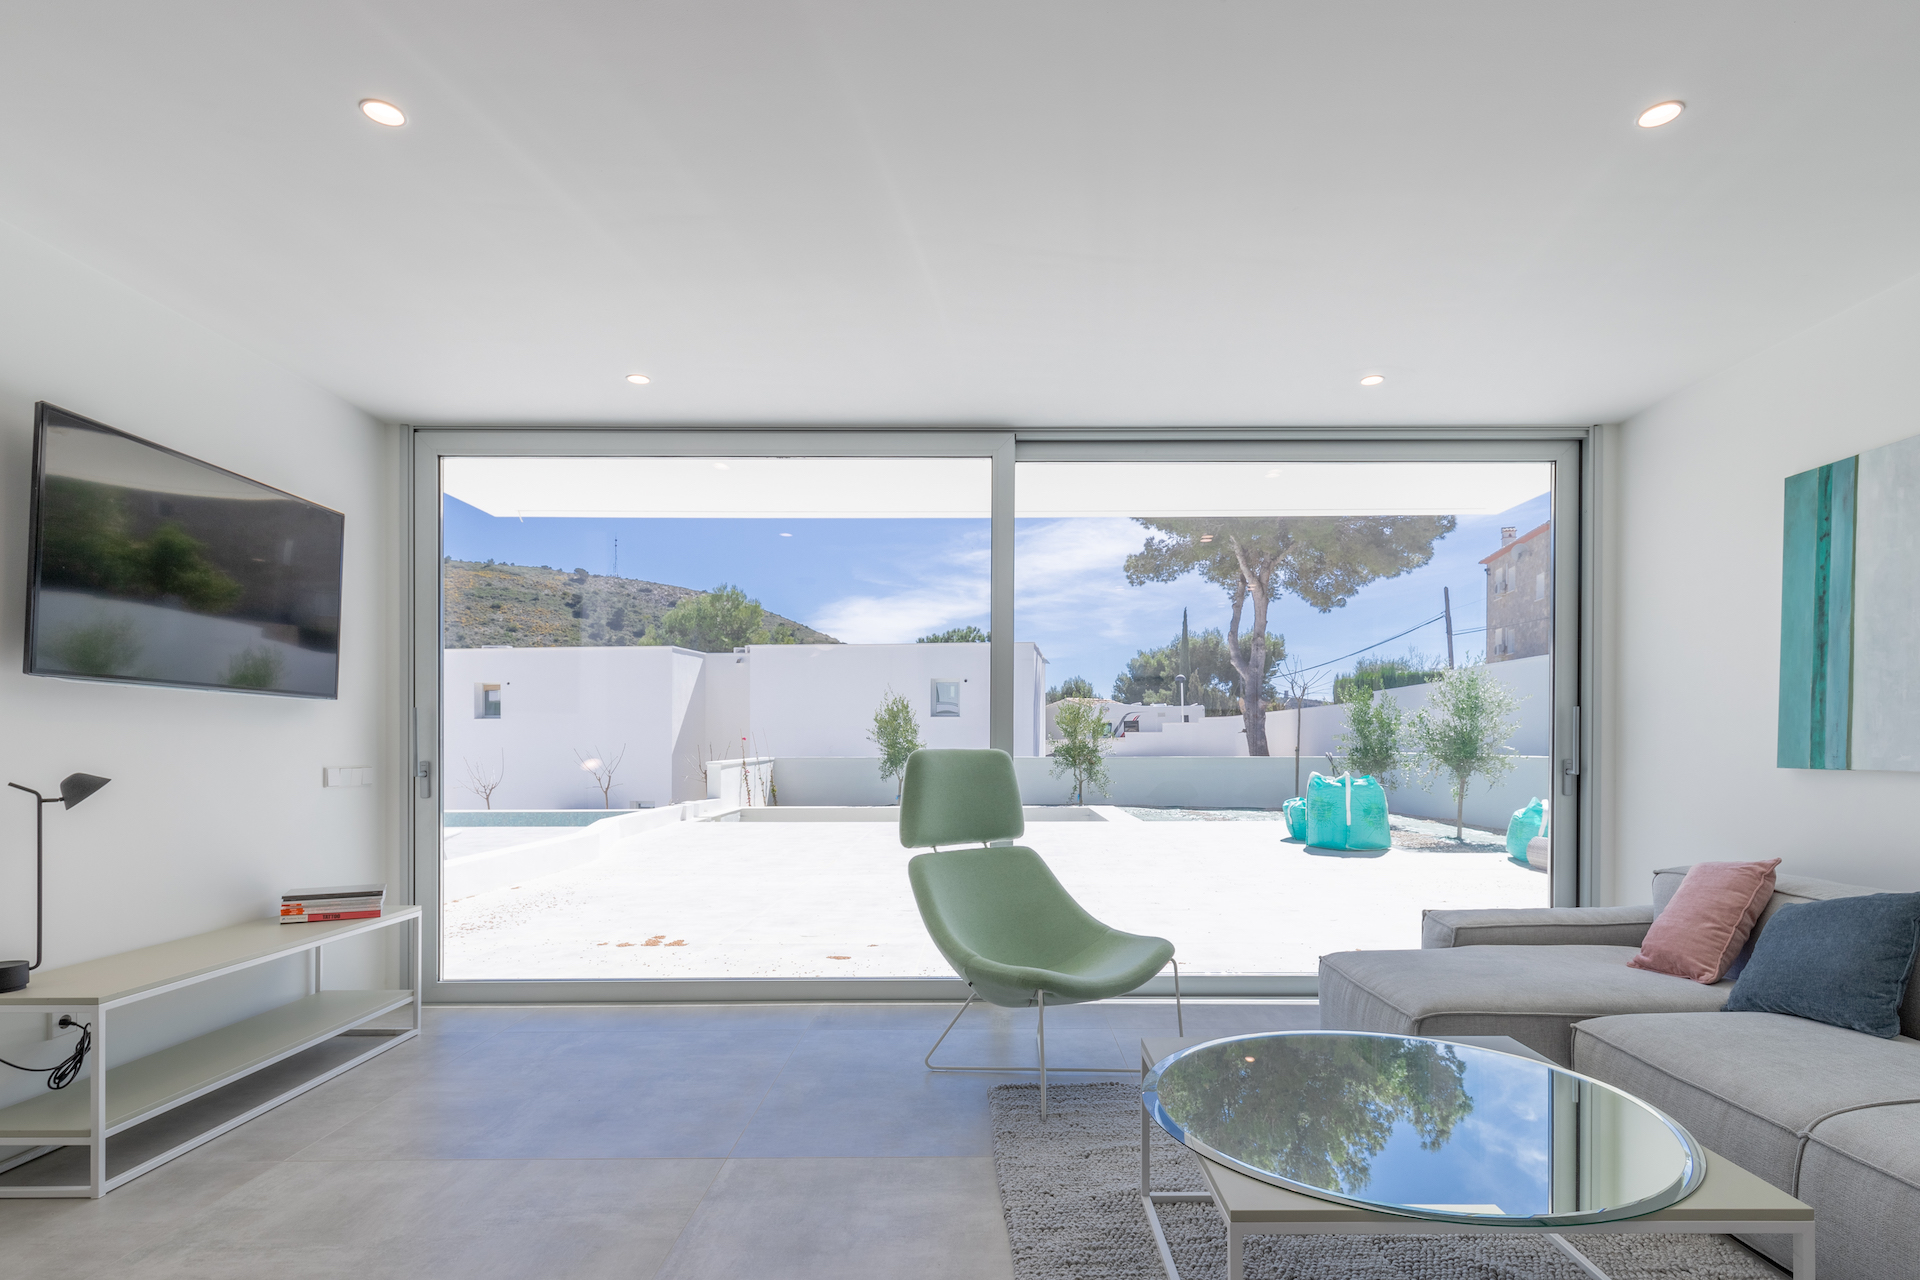 Brand New Semi-Detached Modern Villas El Portet Moraira